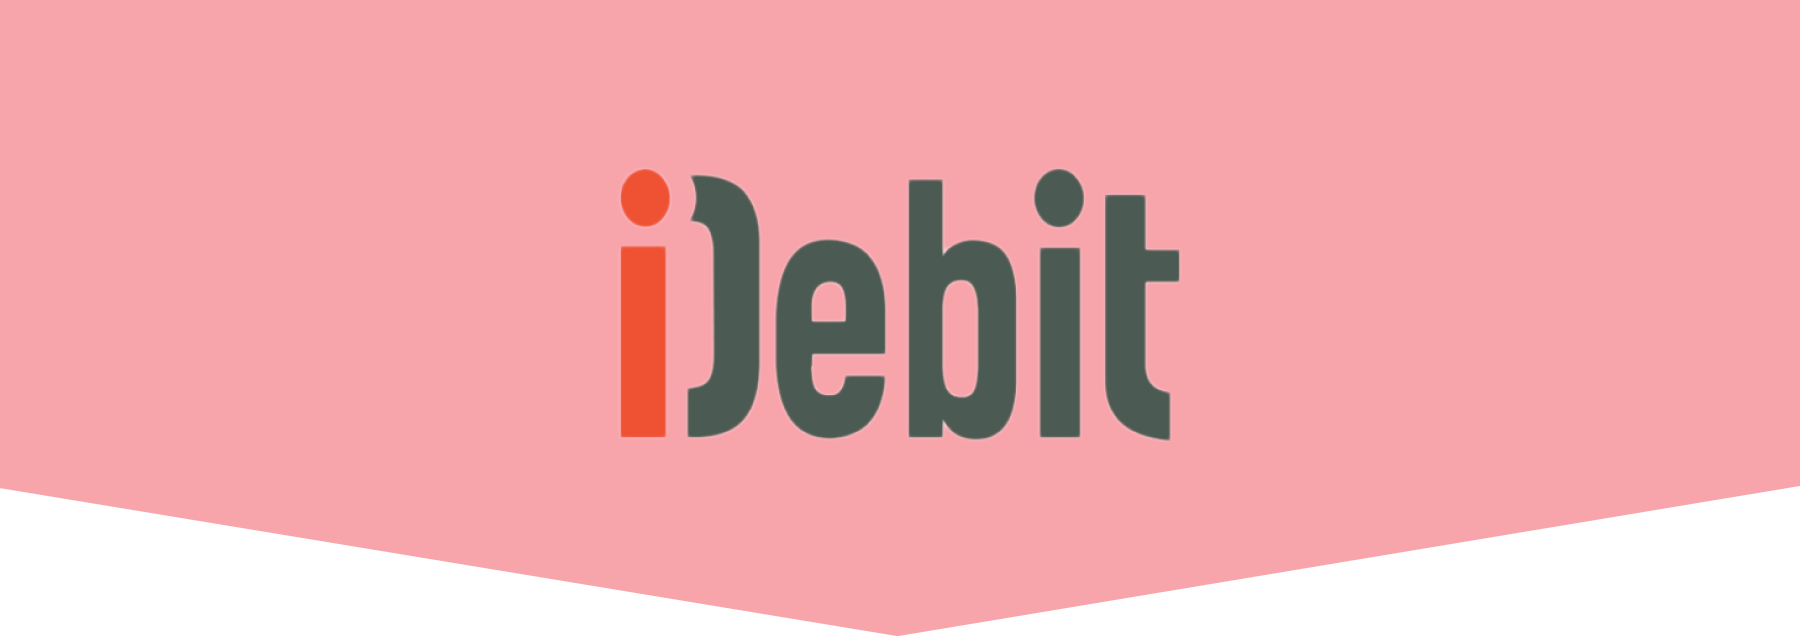 idebit casinos, idebit banking, deposit method